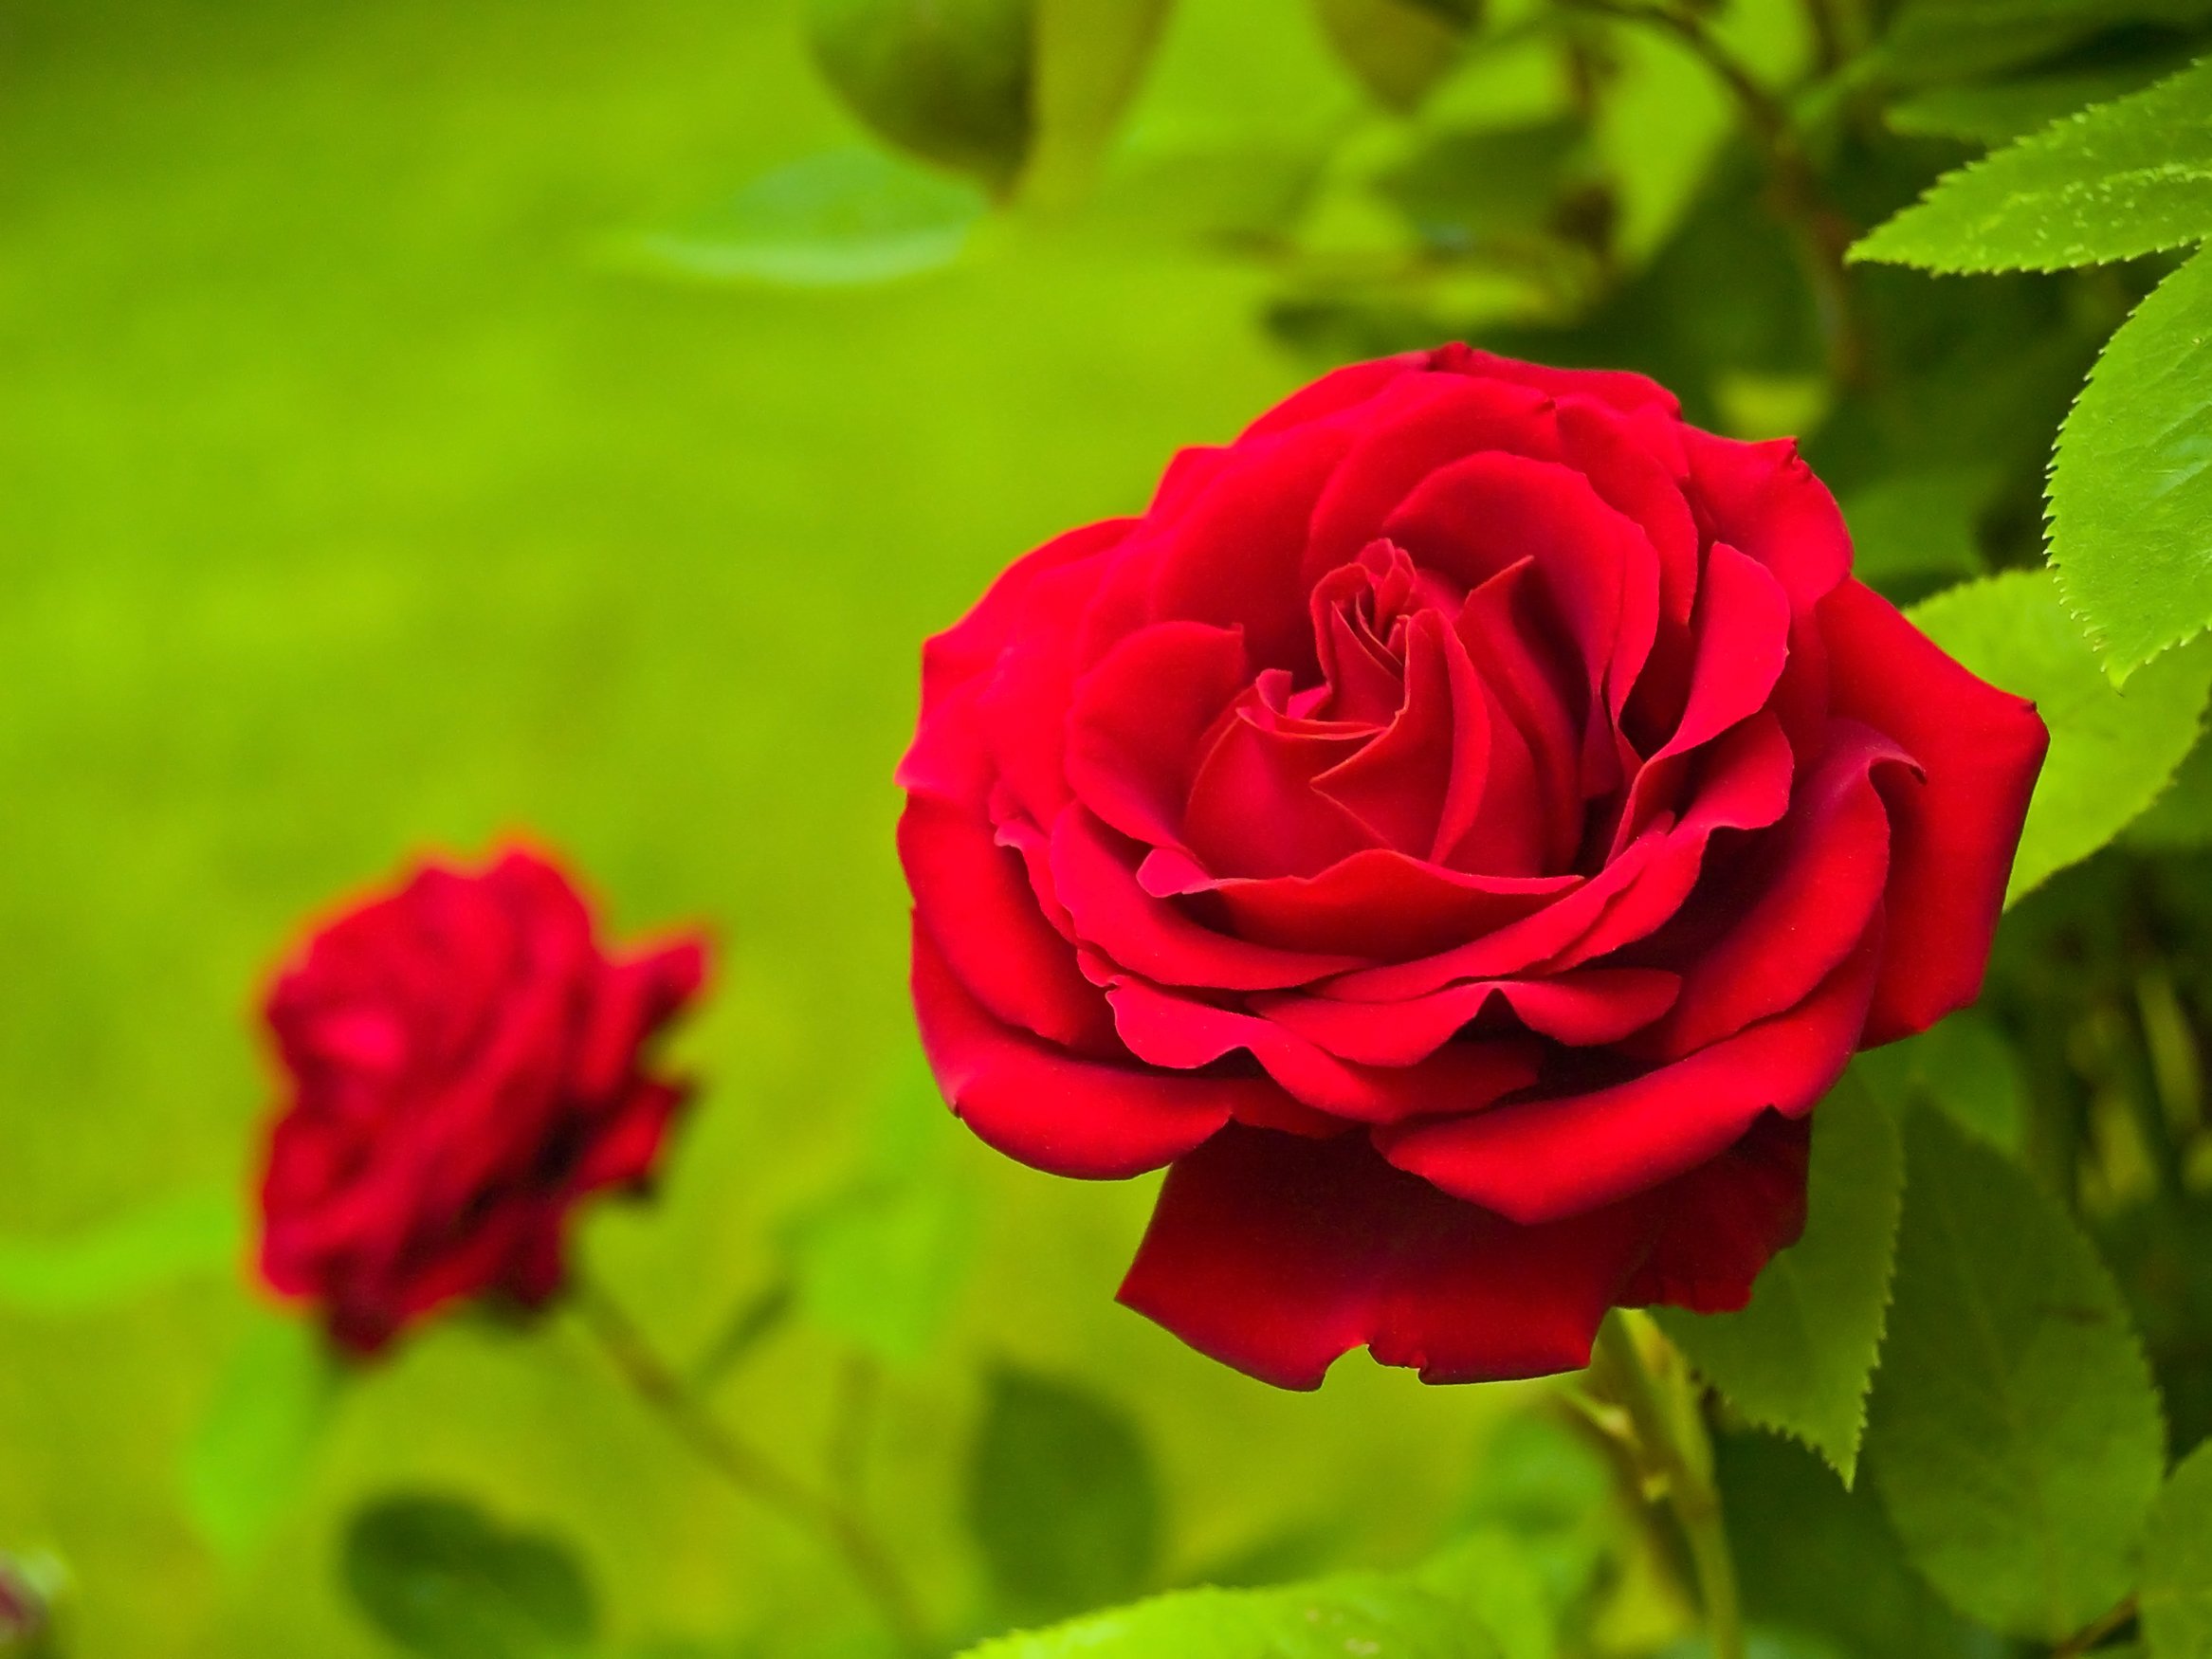 National flower of Iraq - Rose